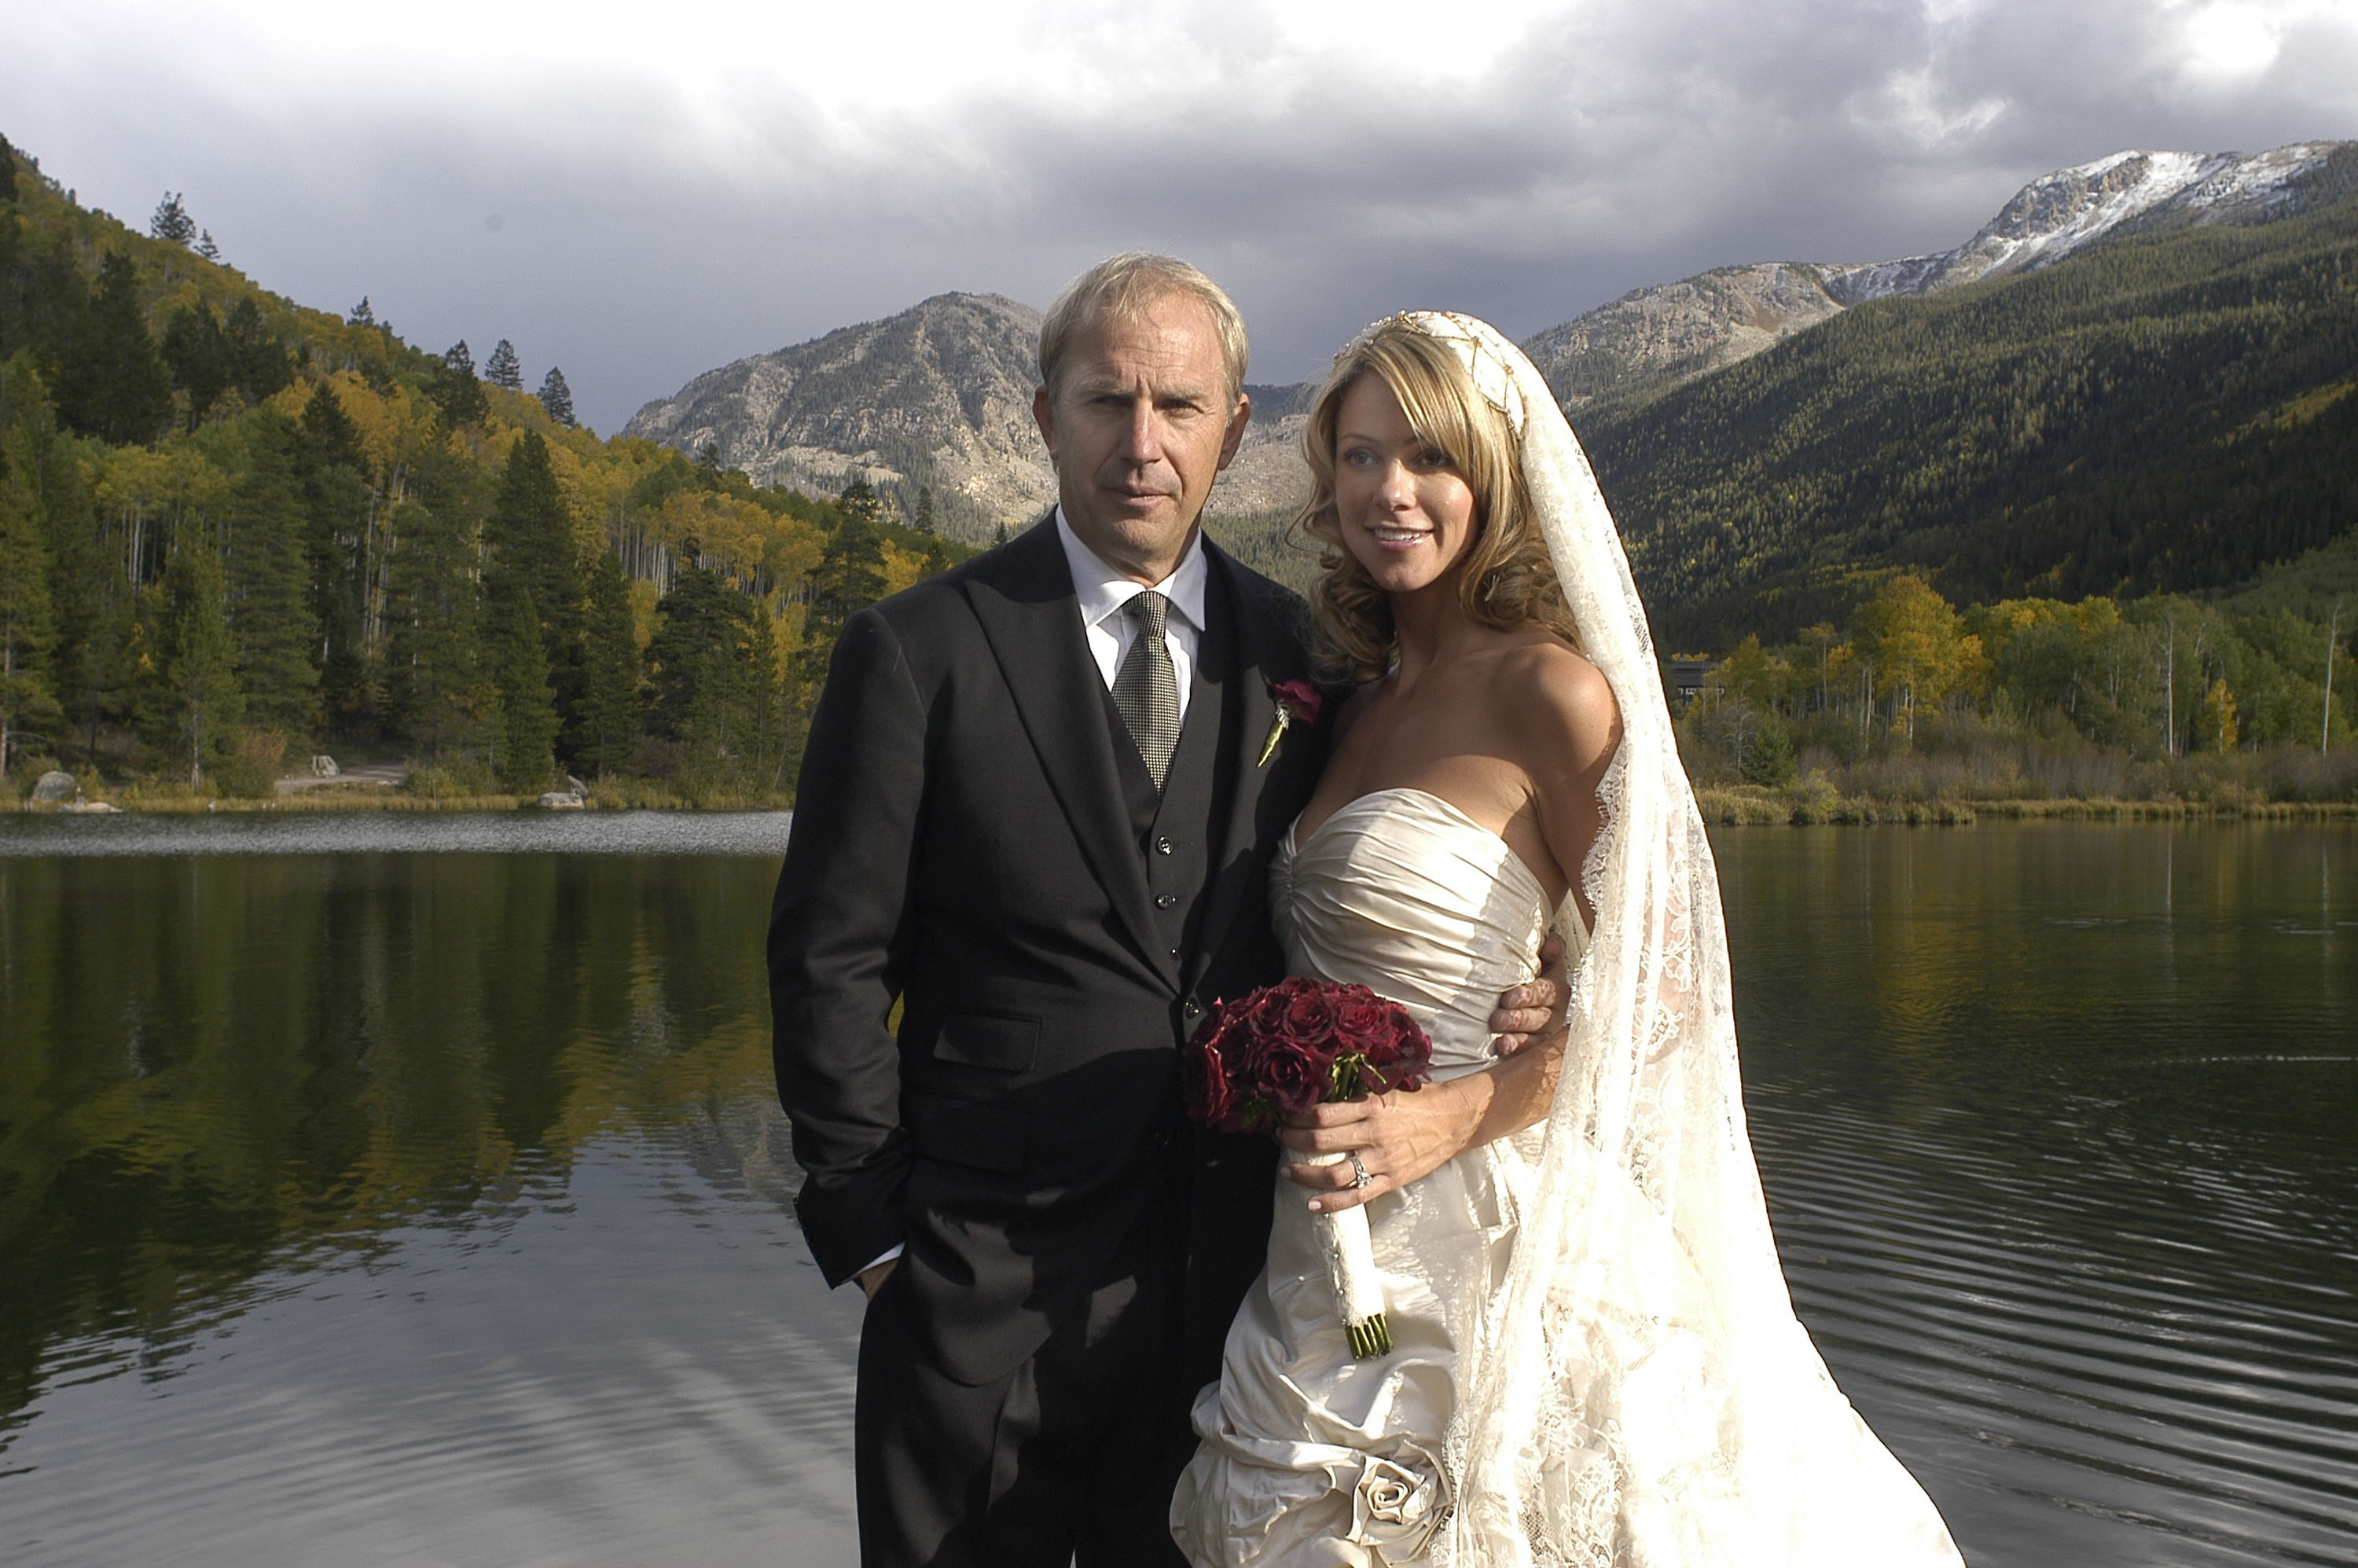 Kevin Costner and Christine Baumgartner at their wedding in Aspen, Colorado ranch on September 25, 2004. | Source: Getty Images